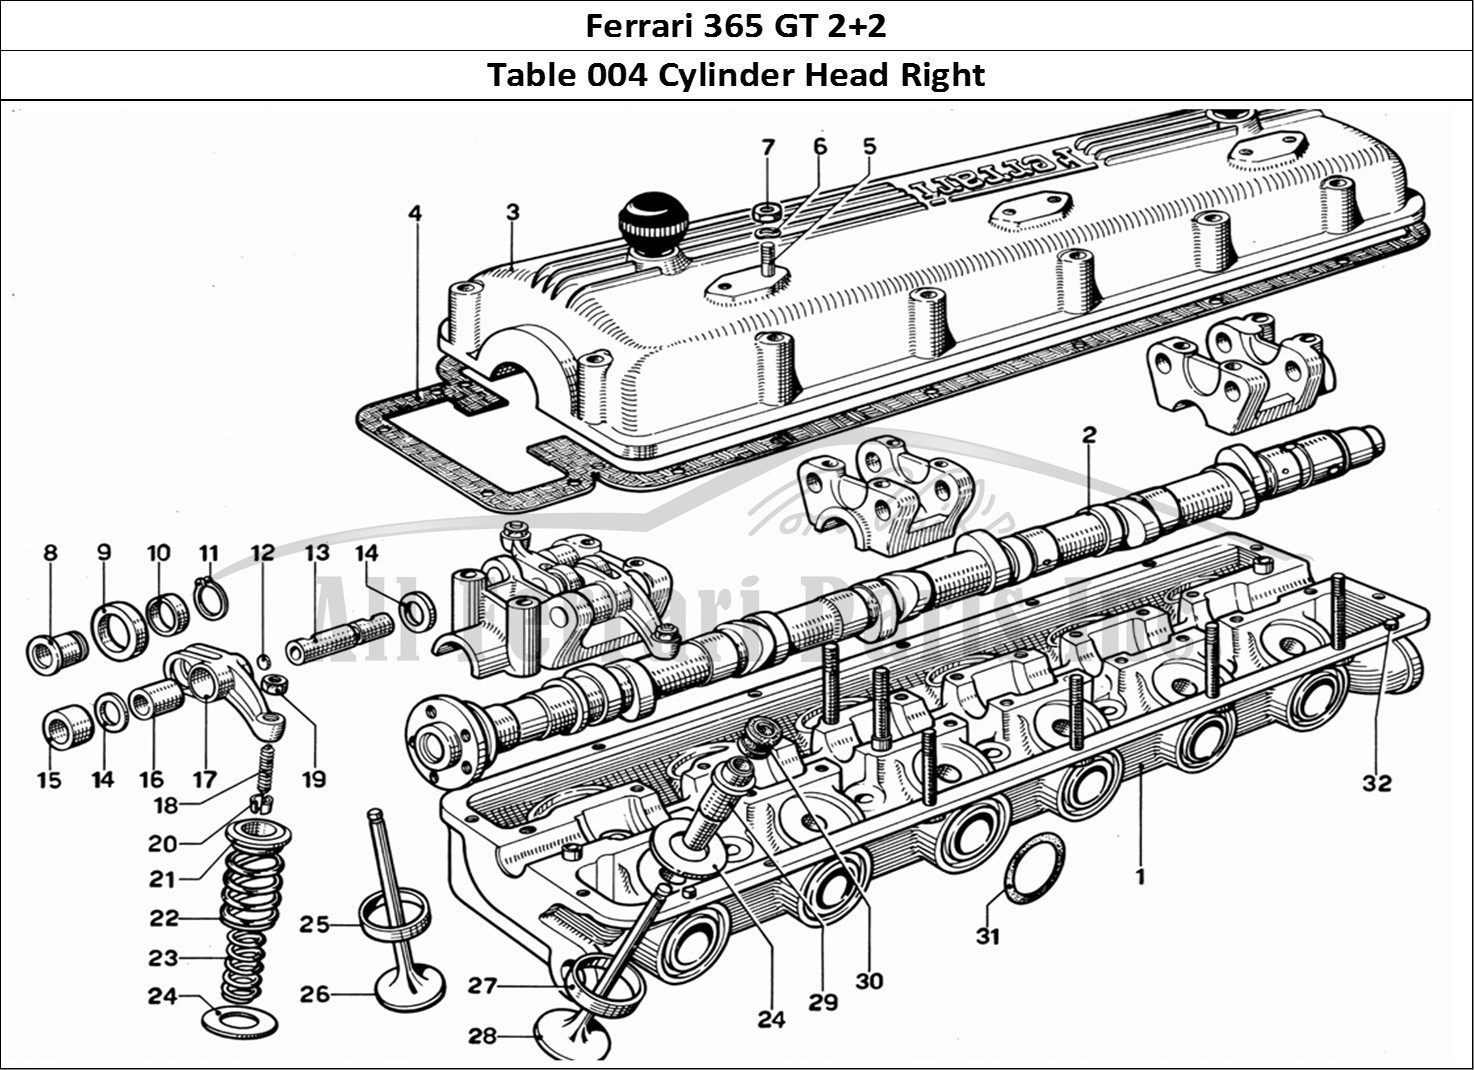 Ferrari Parts Ferrari 365 GT 2+2 (Mechanical) Page 004 Cylinder Head (Right)